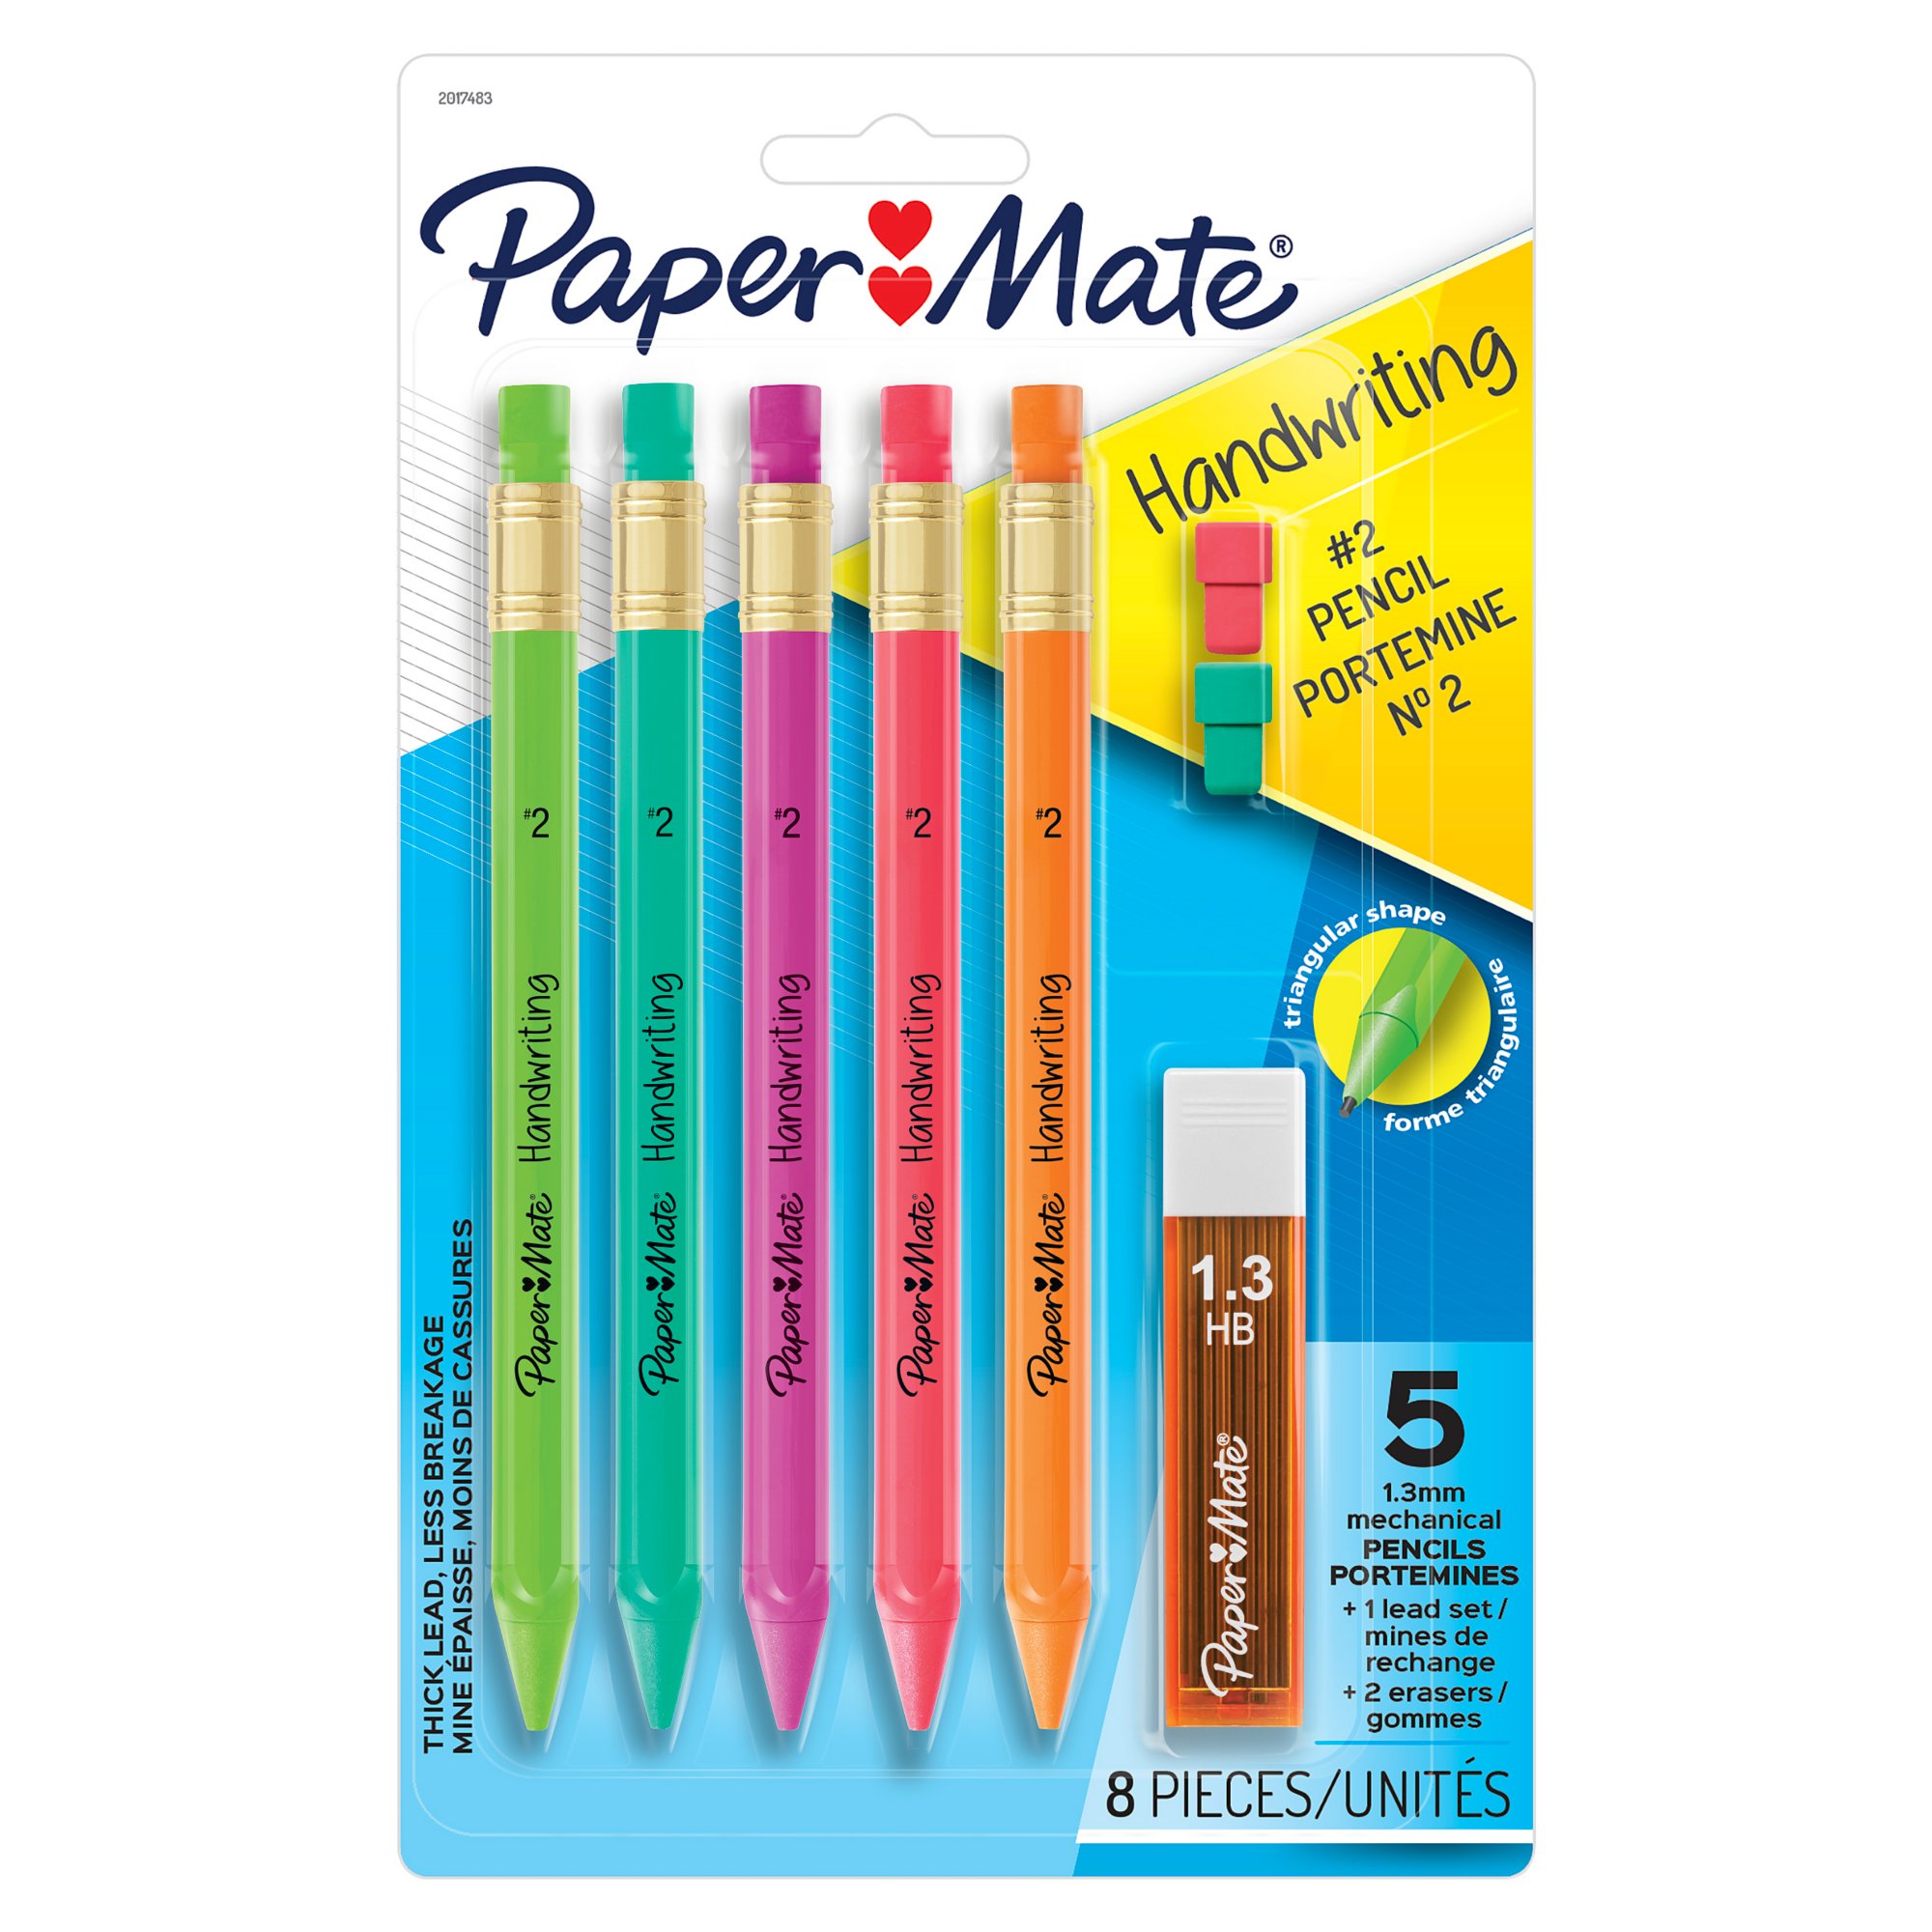 Paper Mate Handwriting Triangular Mechanical Pencil Set